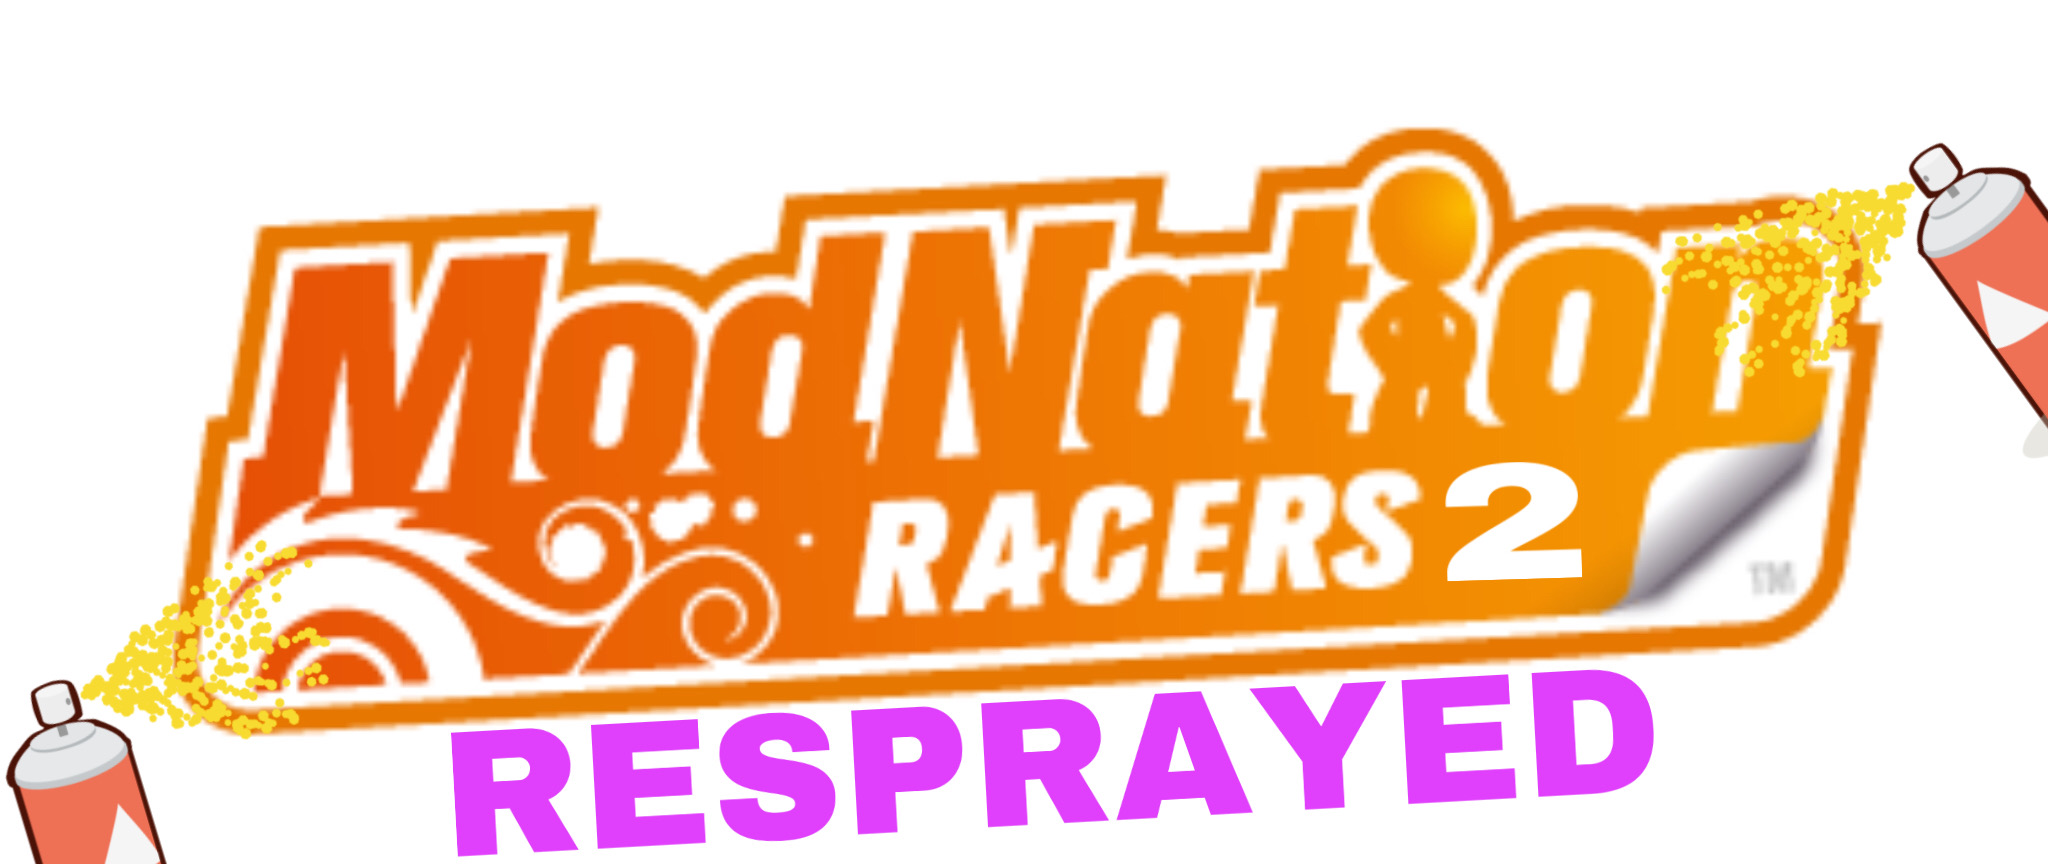 download modnation racers 2 resprayed